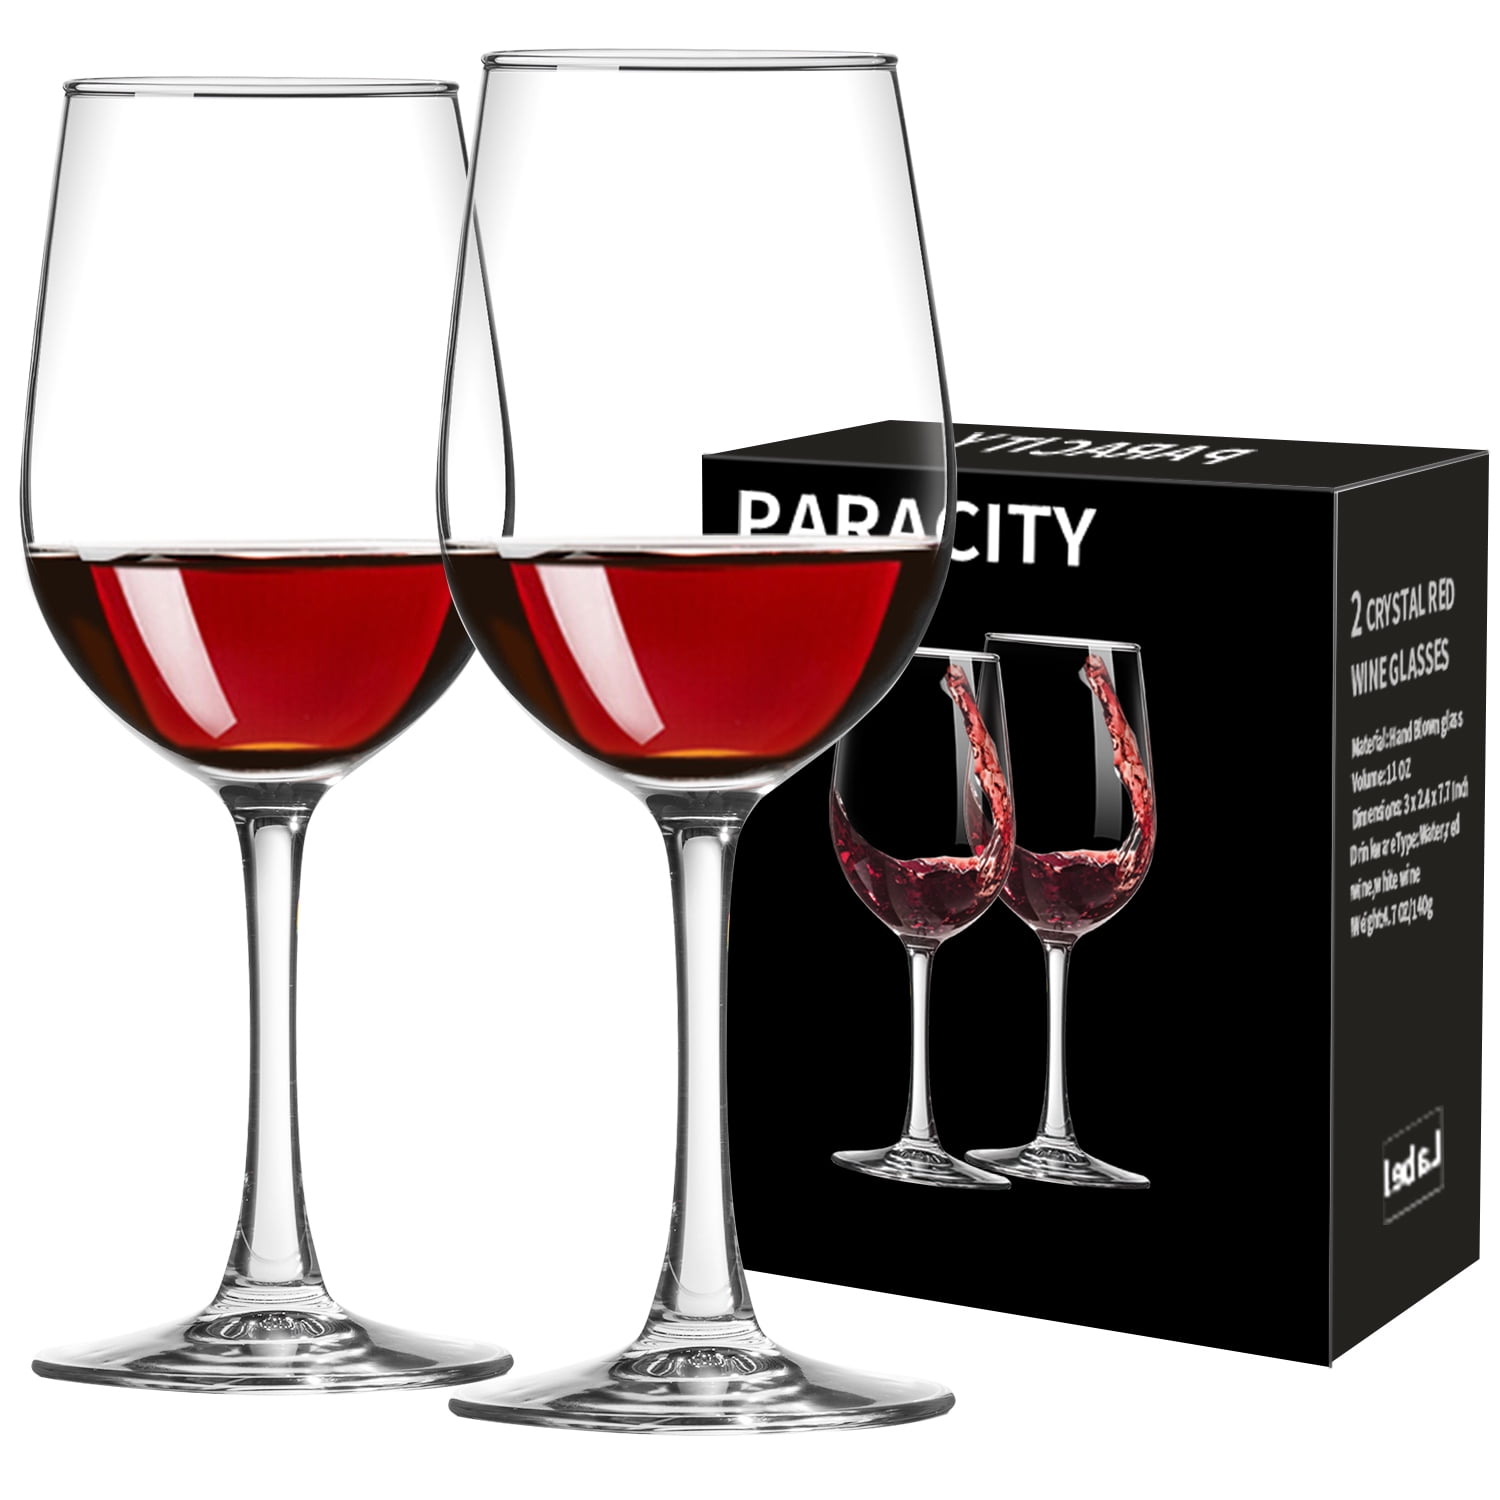 Lefonte Wine Glasses, Stemmed Wine Glasses, Glass Cups with Stem, Red Wine  Glasses, Crystal Drinking…See more Lefonte Wine Glasses, Stemmed Wine